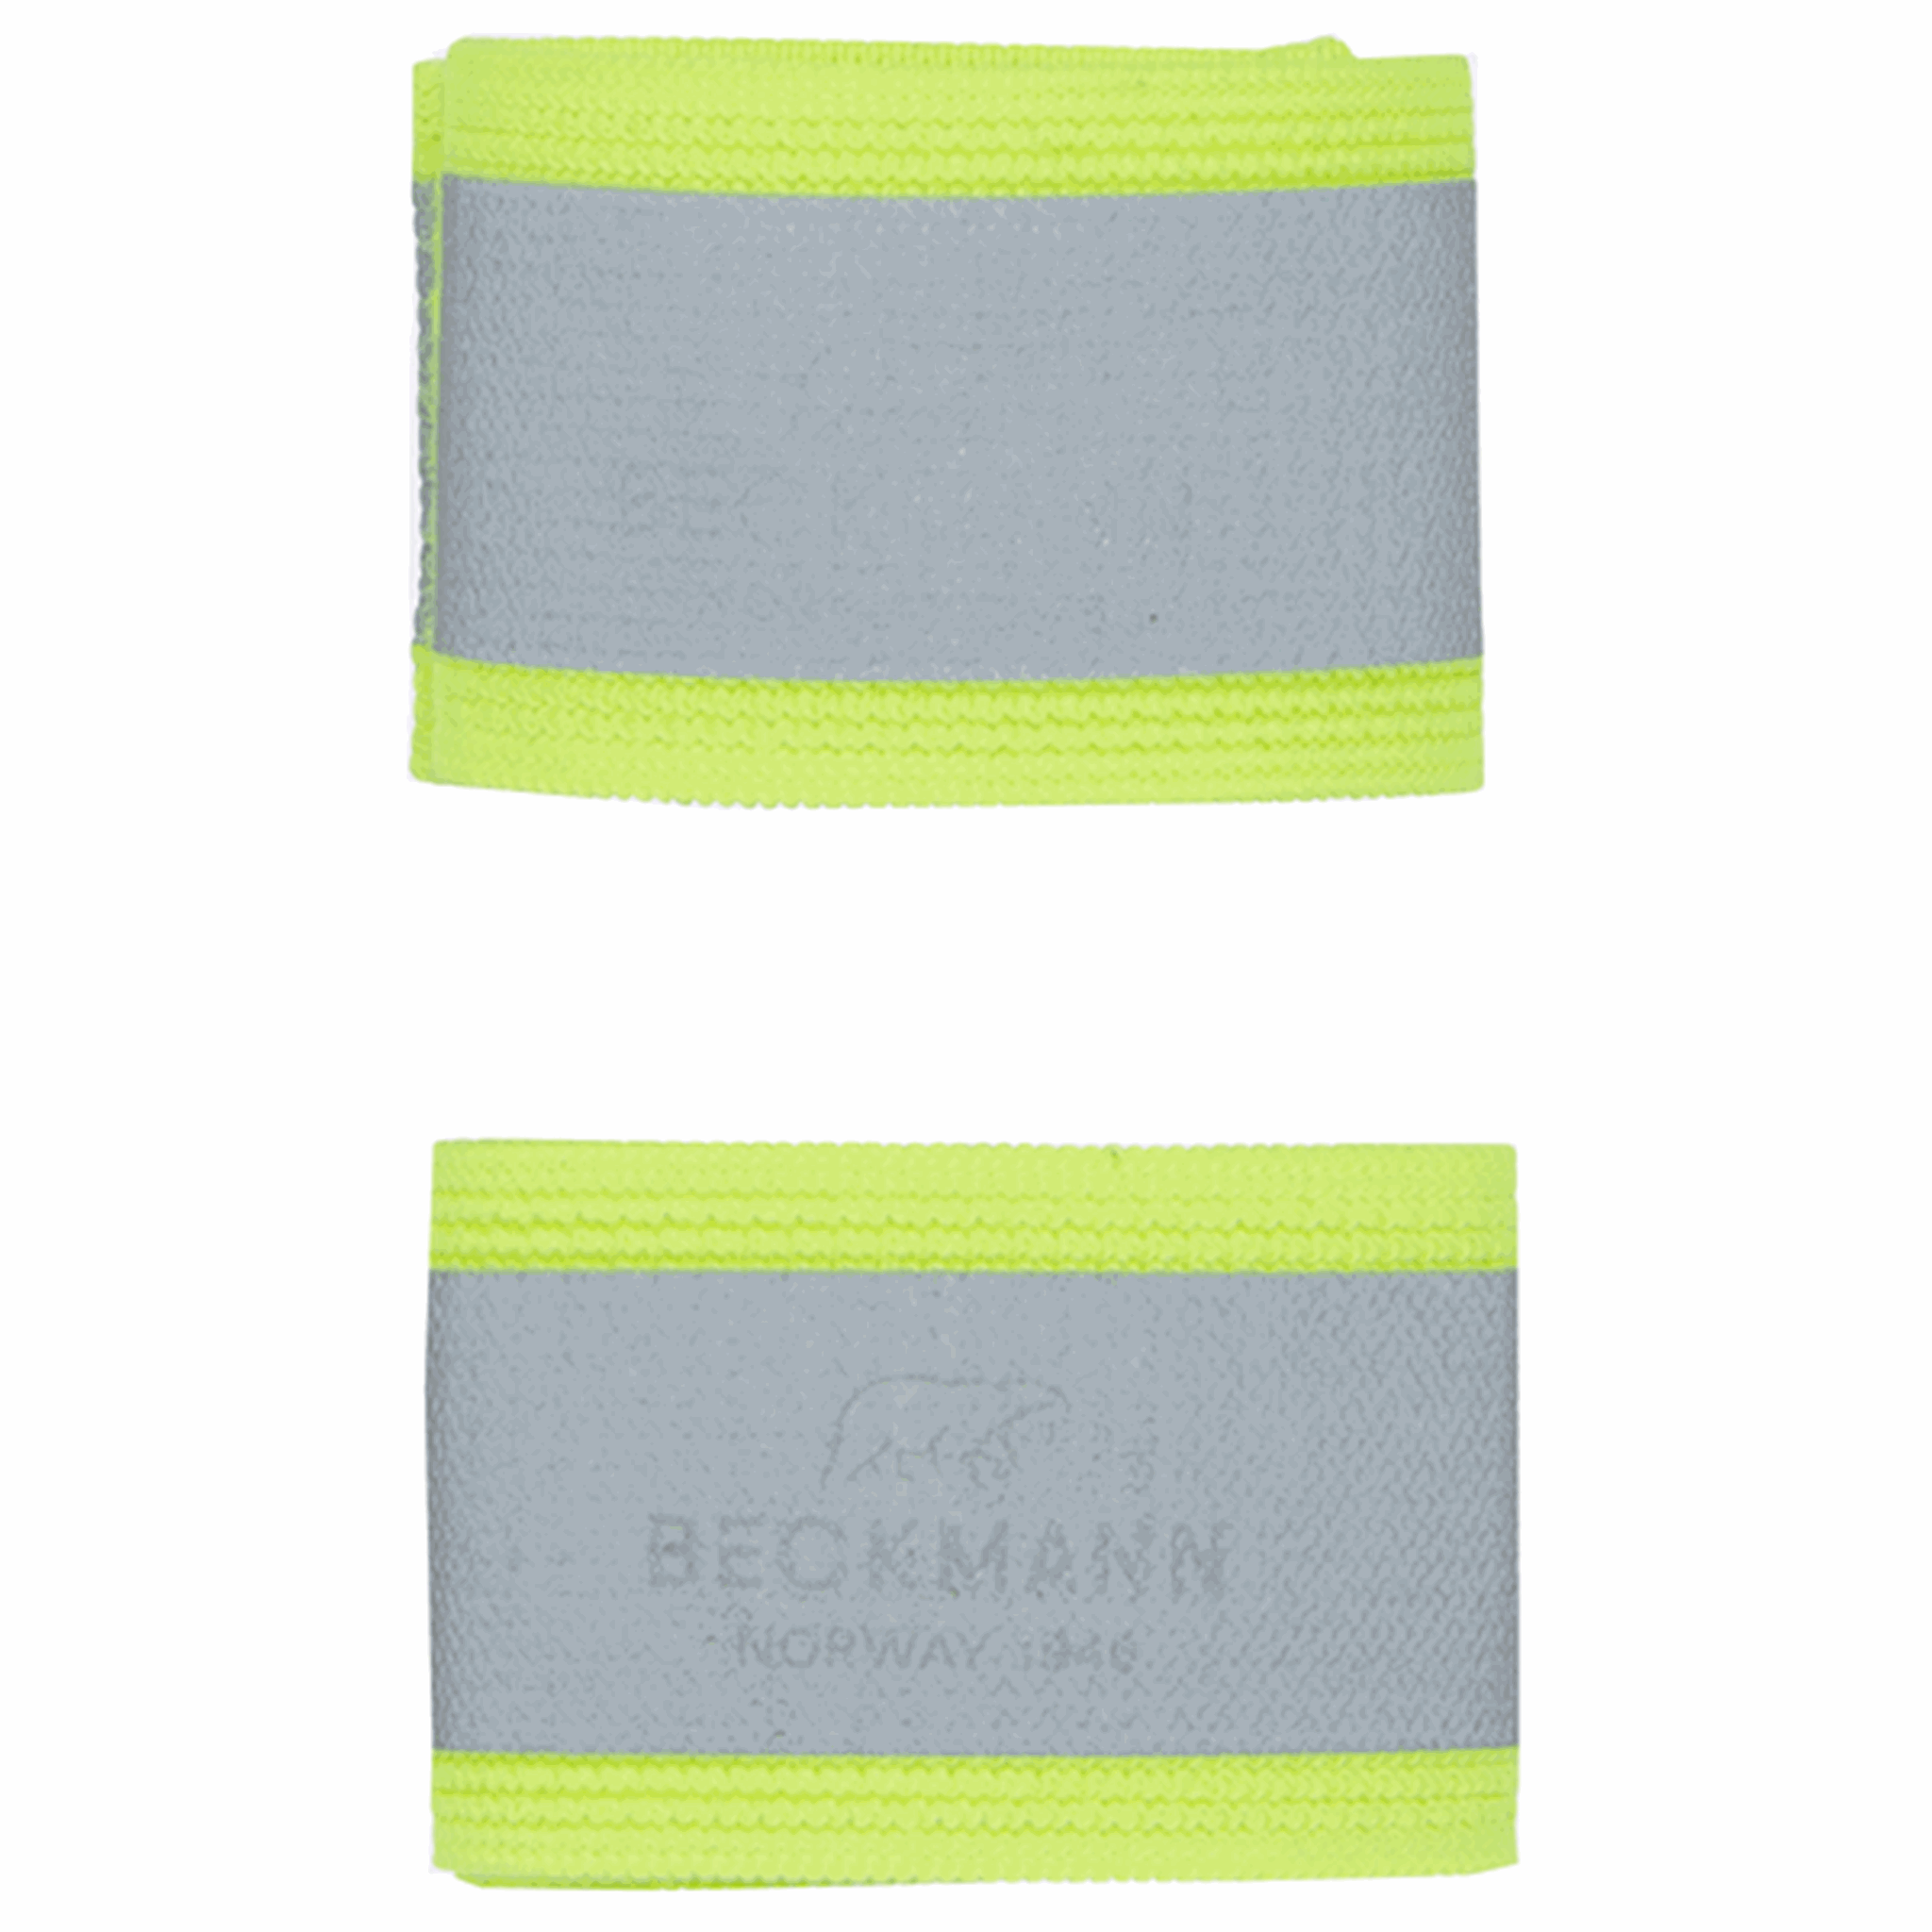 Beckmann Reflective Tape Yellow